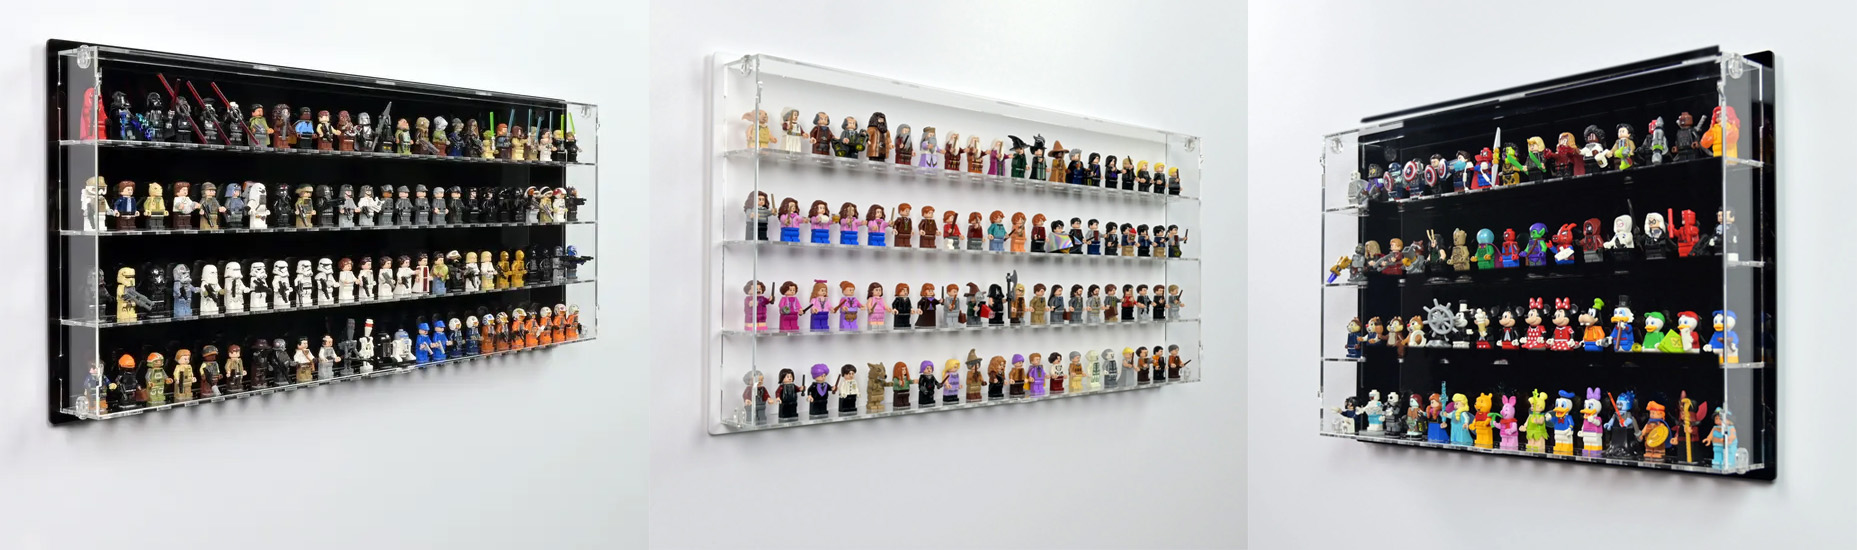 Wall-mounted LEGO Minifigure displays